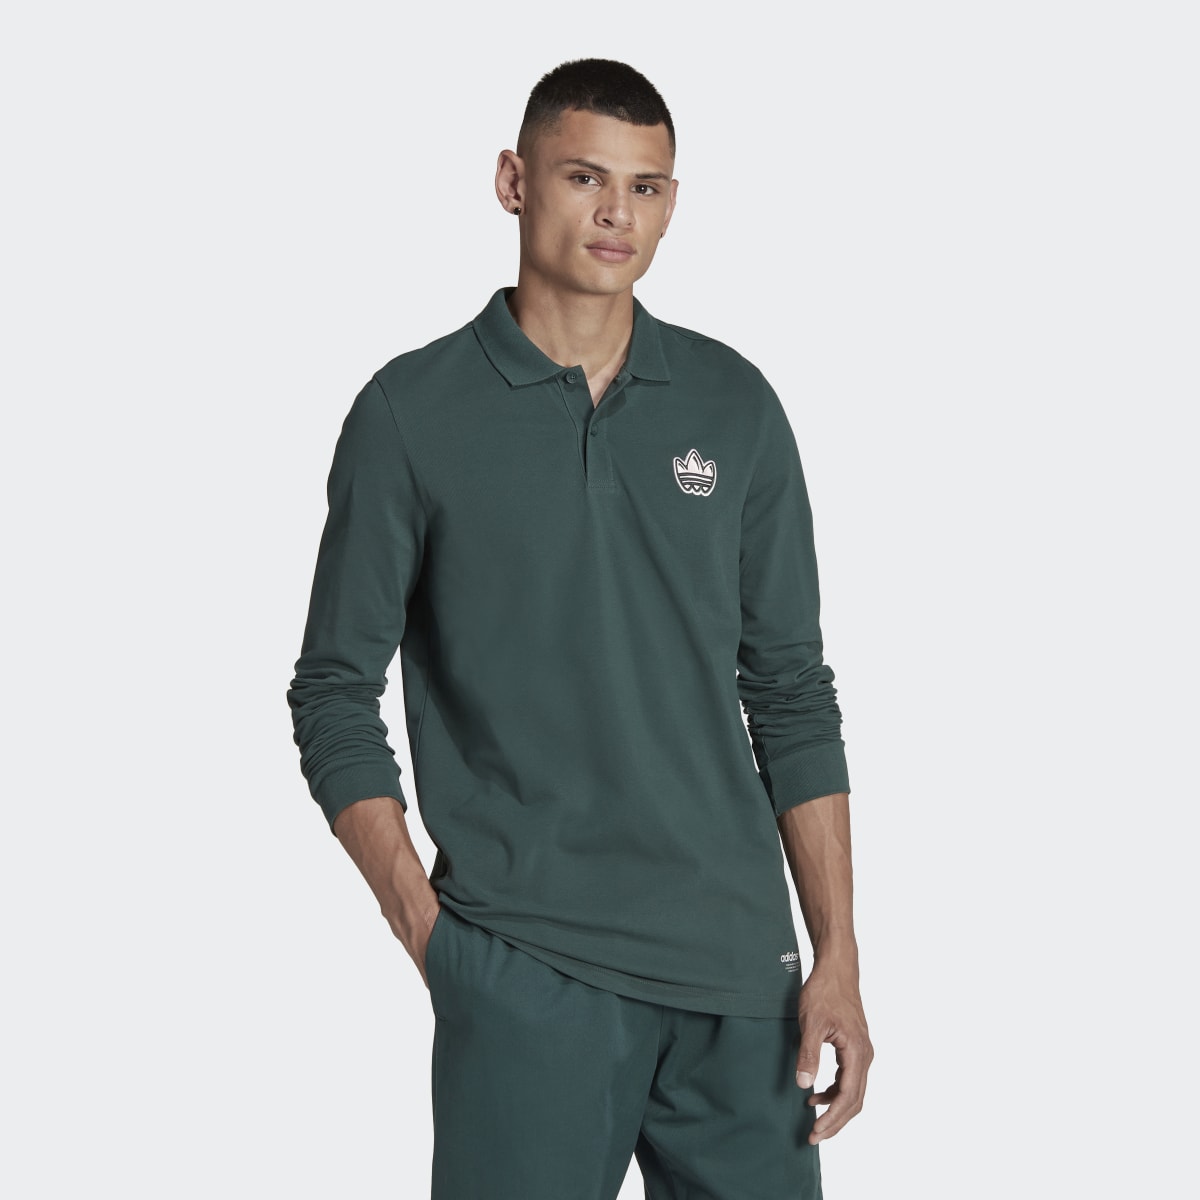 Adidas Graphics Campus Long Sleeve Polo Shirt. 4